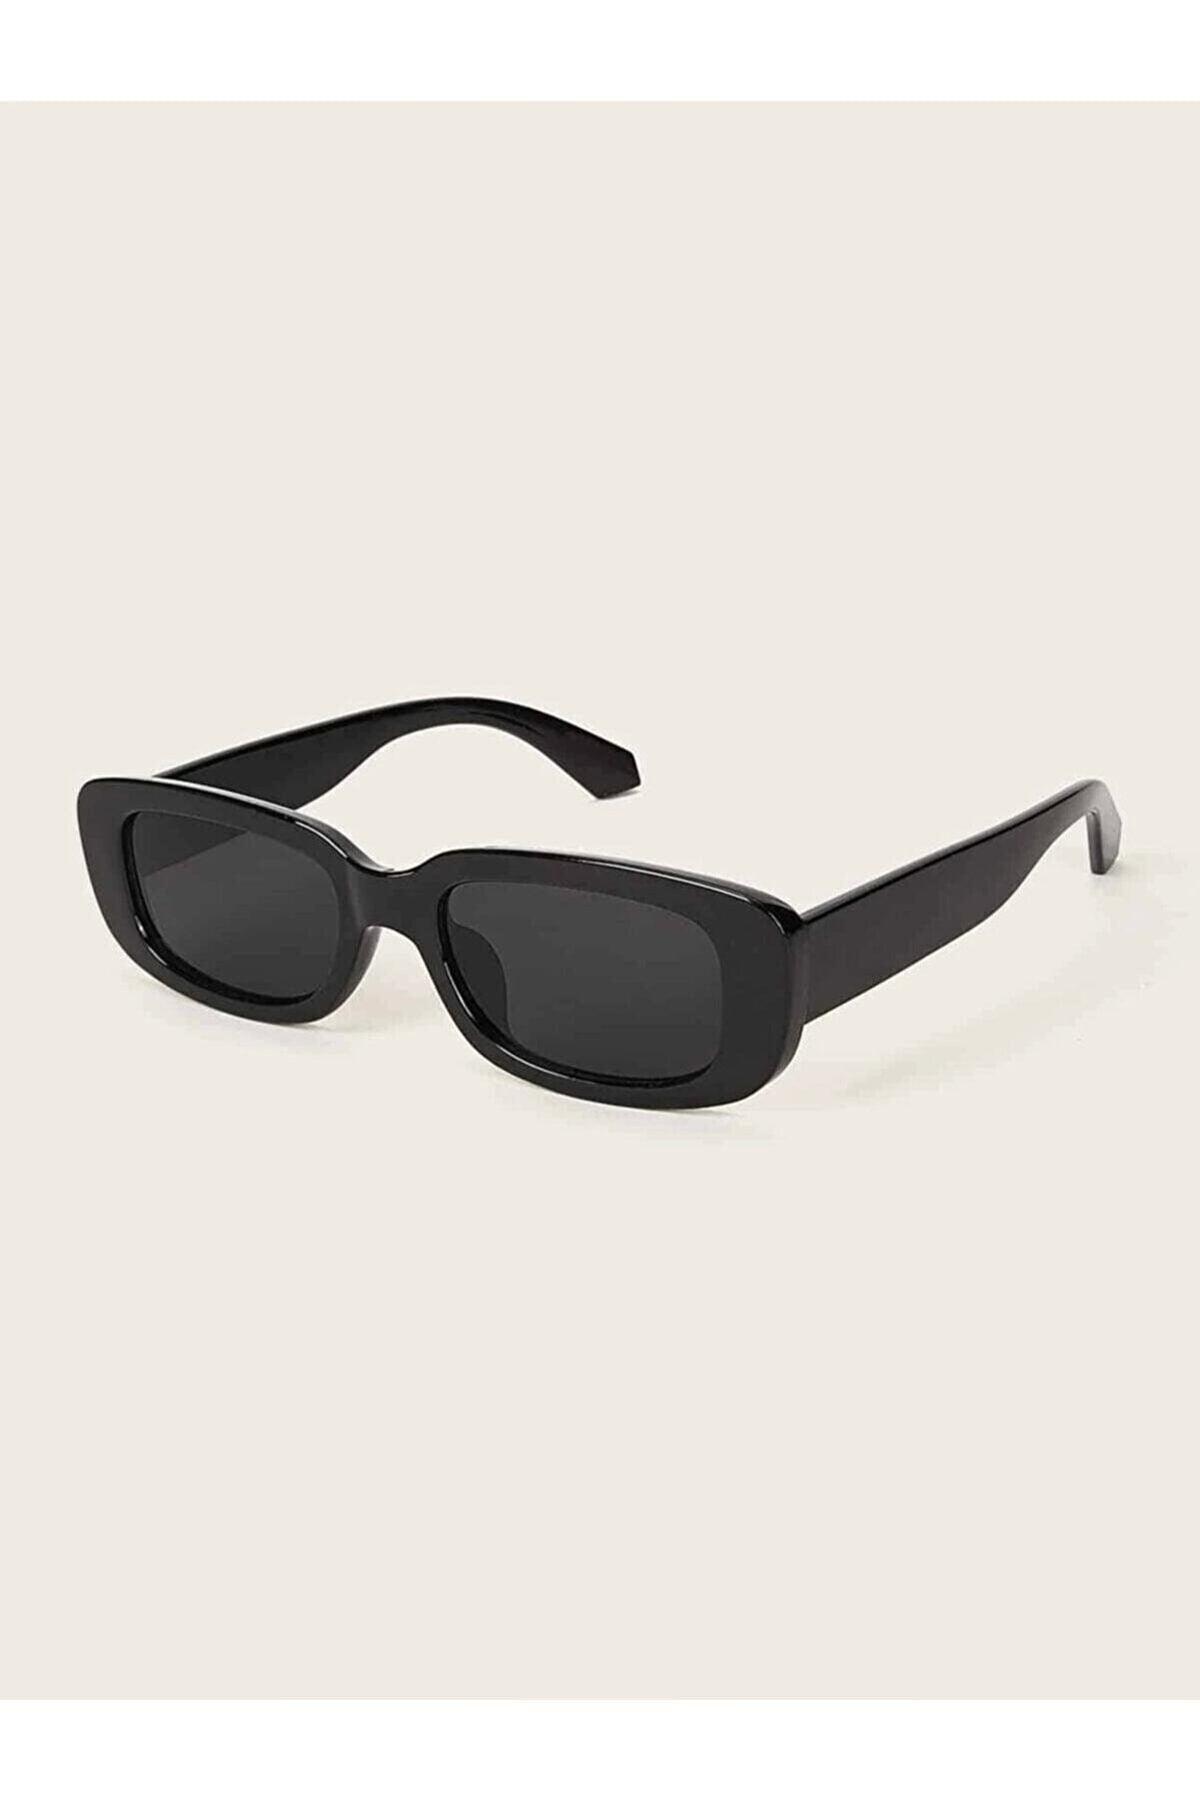 Unisex Black Vintage Retro Bone Sunglasses Chunkyframe - Swordslife